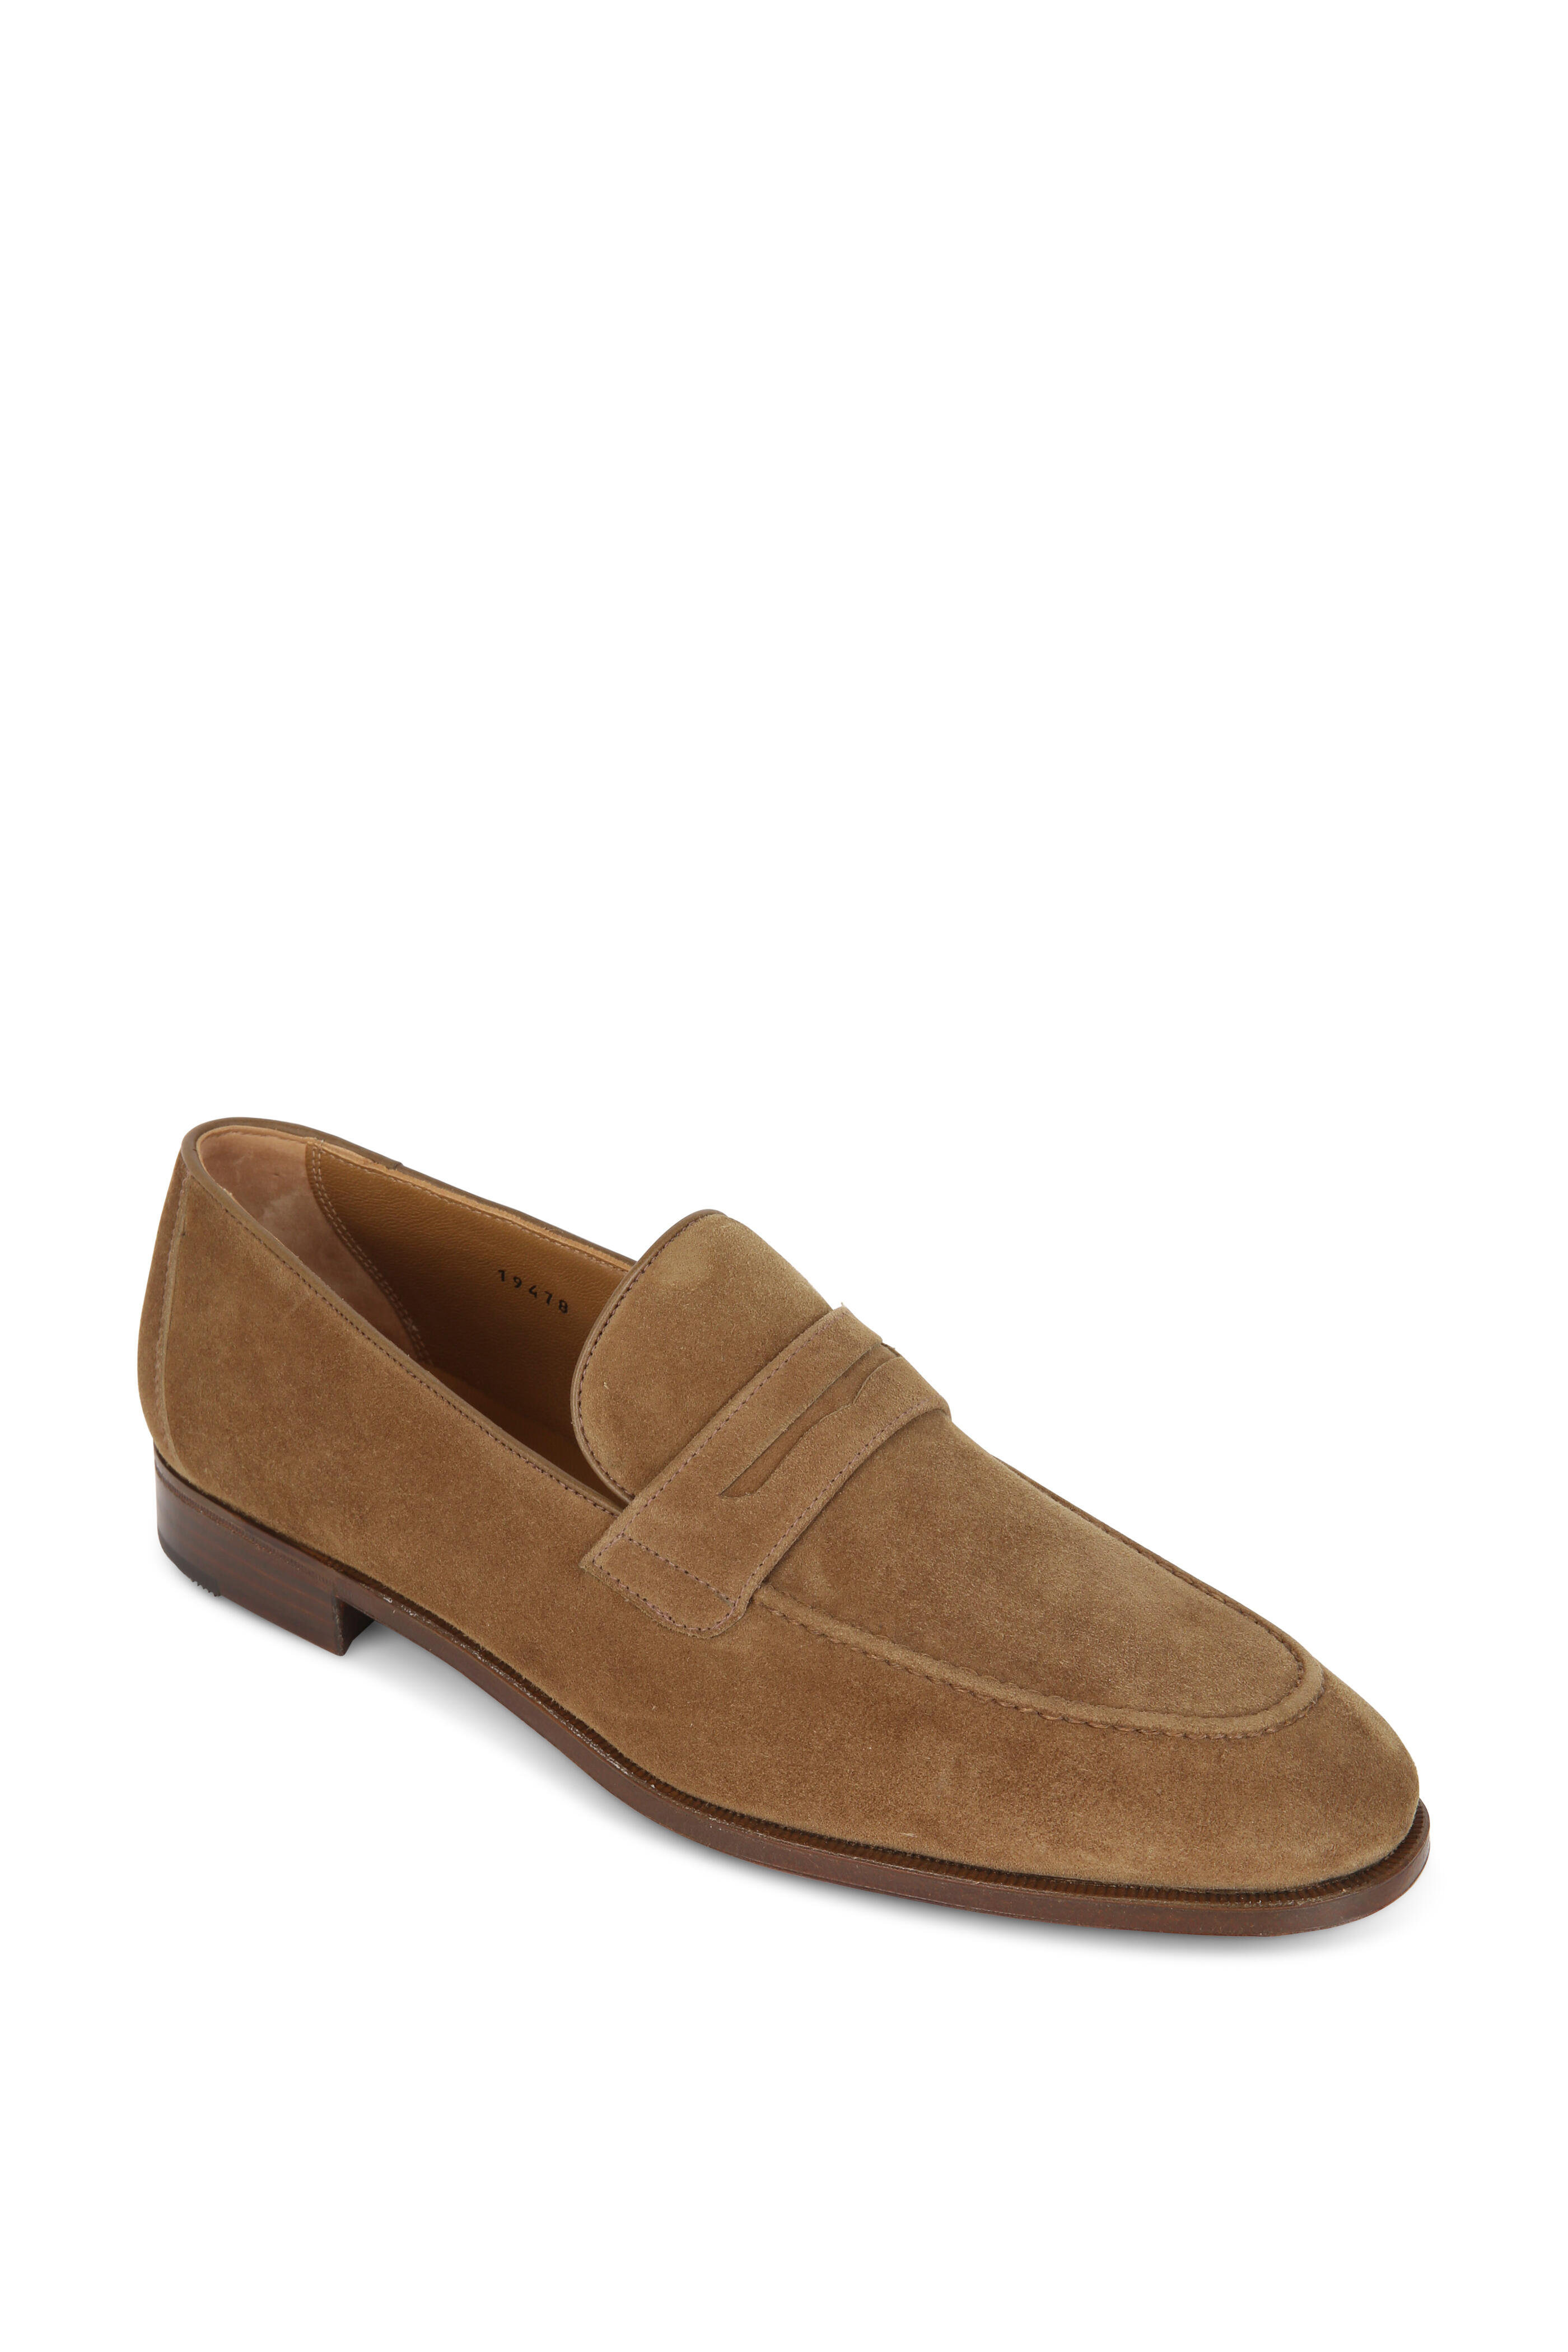 Gravati, Shoes, Mens Size 2 M Gravati Bergdorf Goodman Italy Brown  Leather Shoes 17785 655